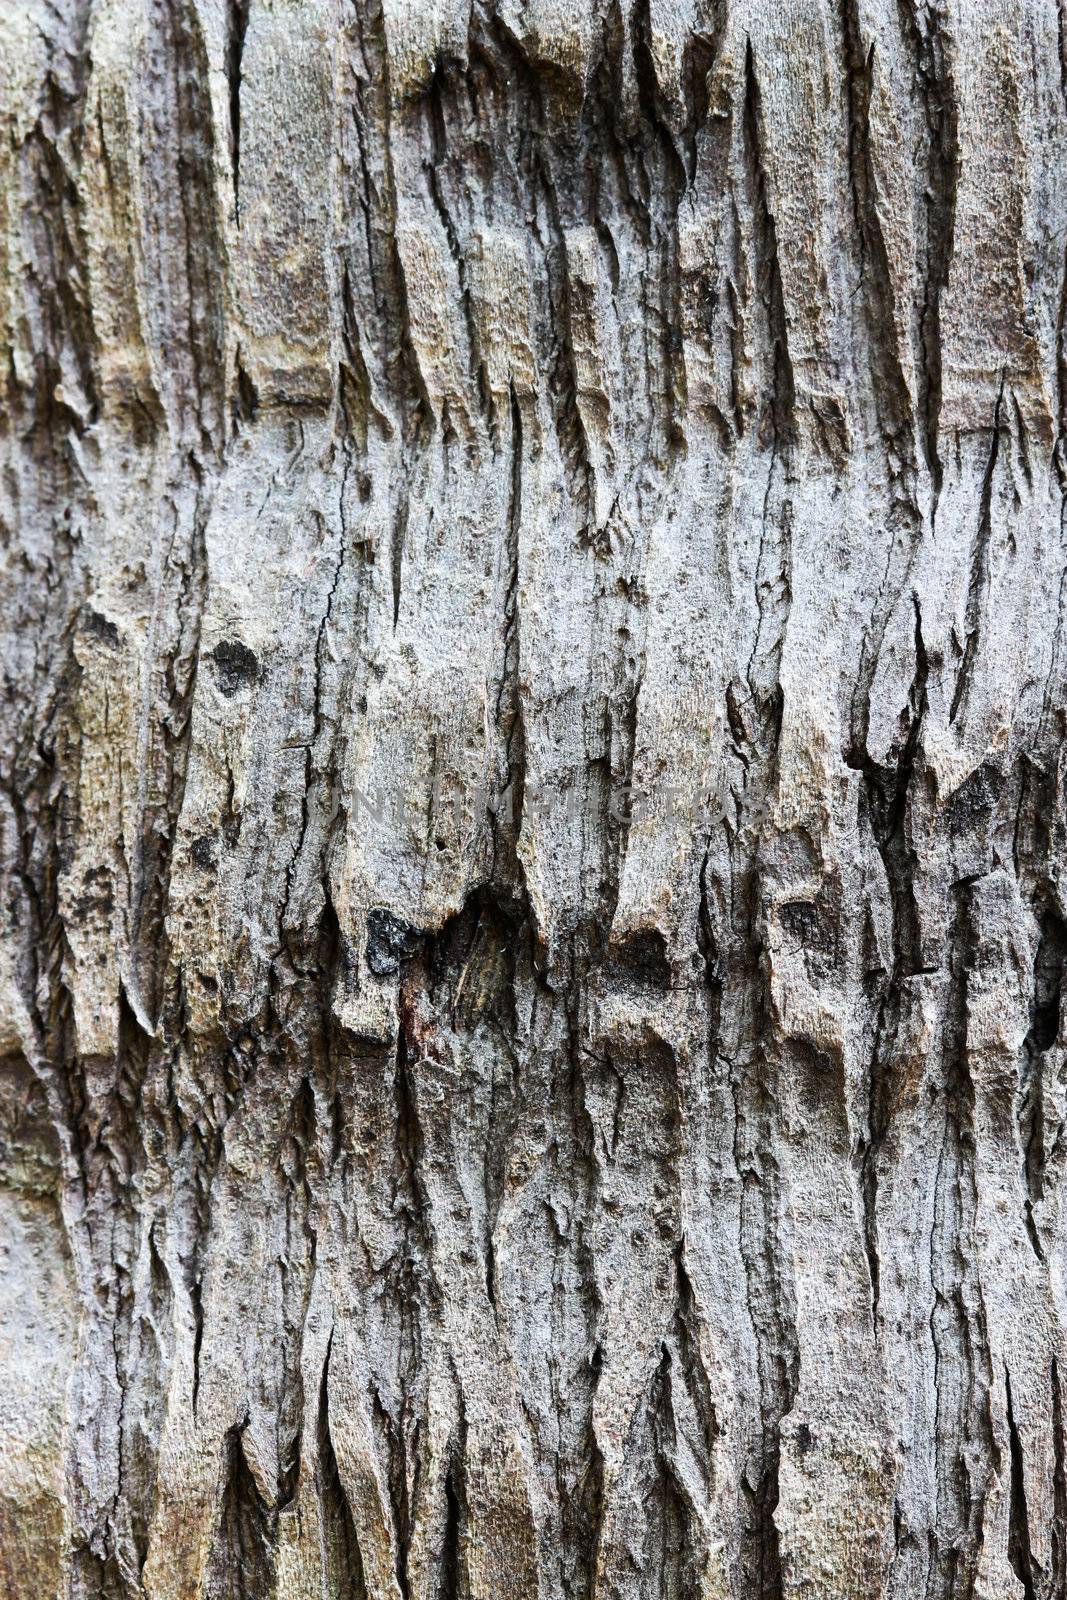 closes - up bark